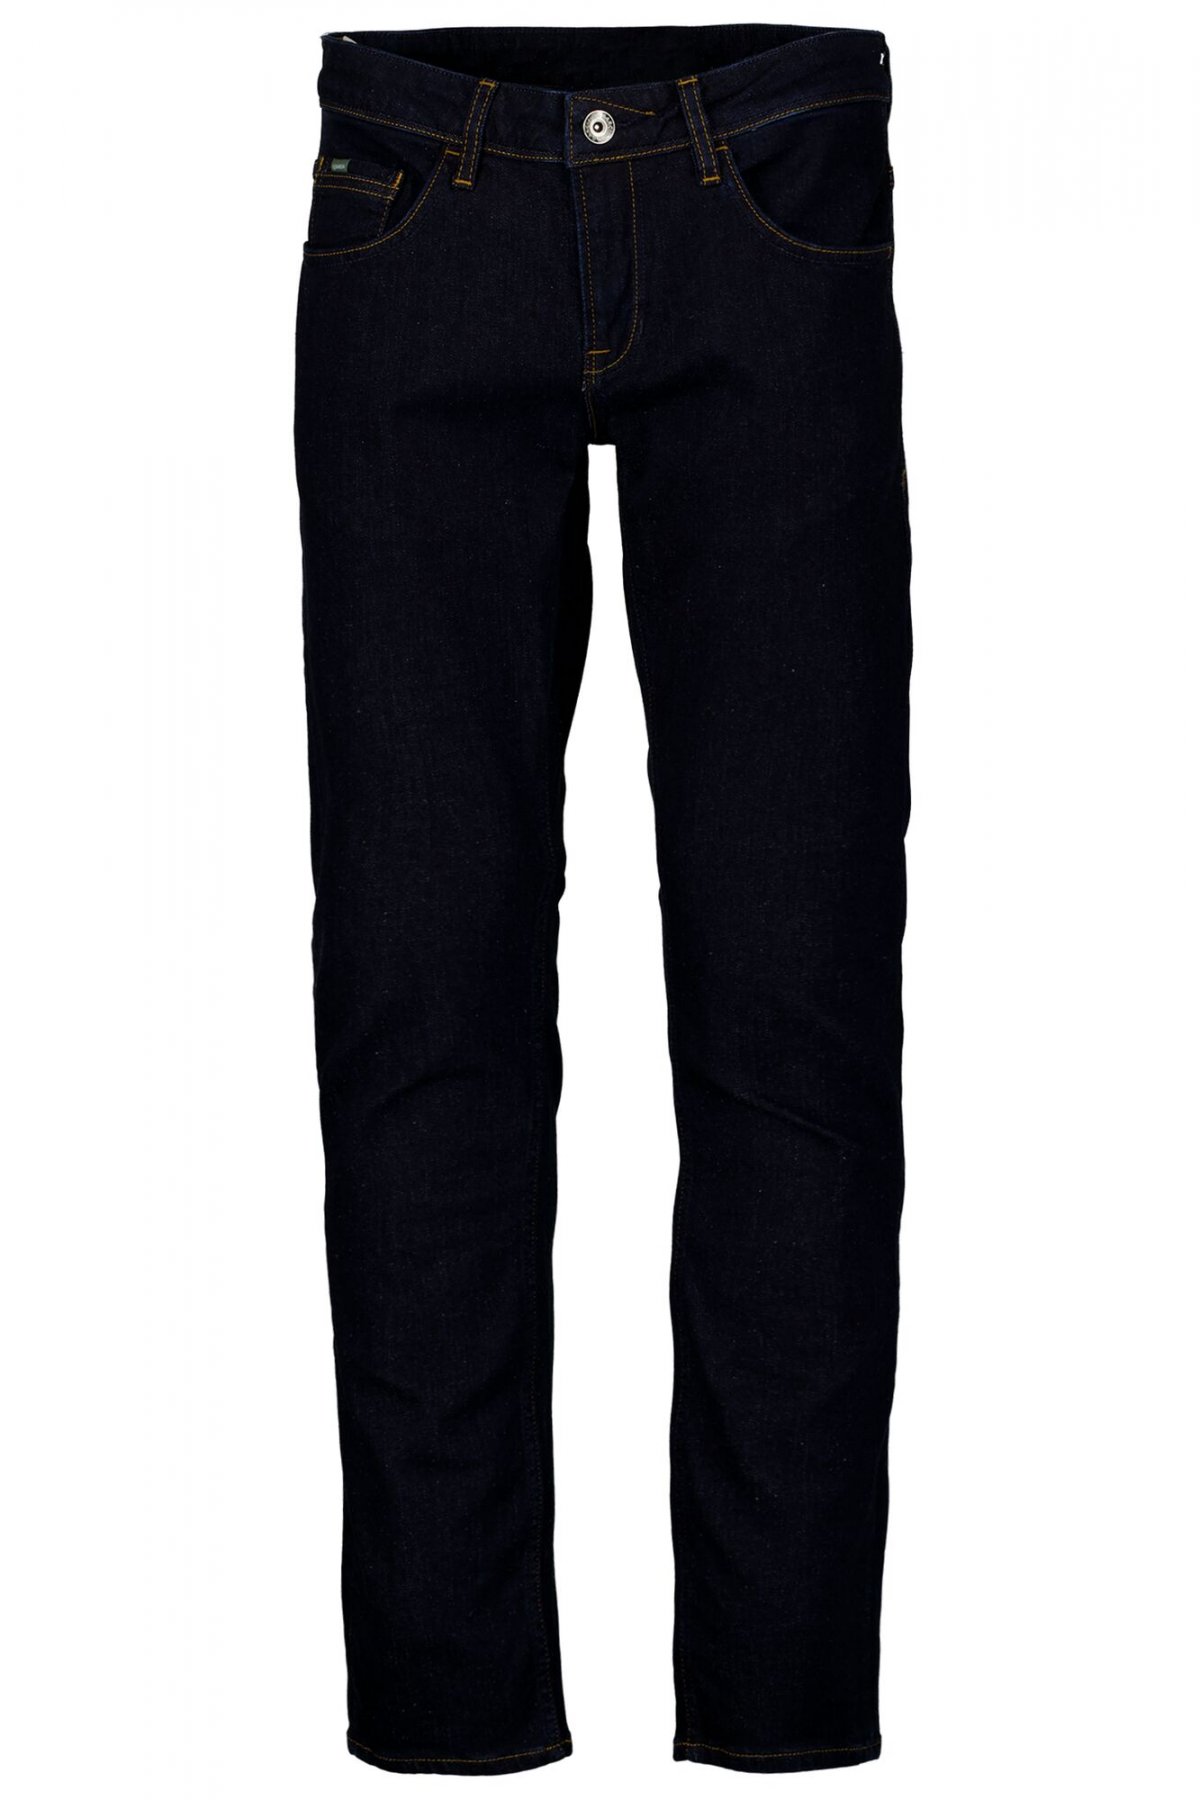 Men's Garcia jeans-dark blue-SAVIO SLIM FIT